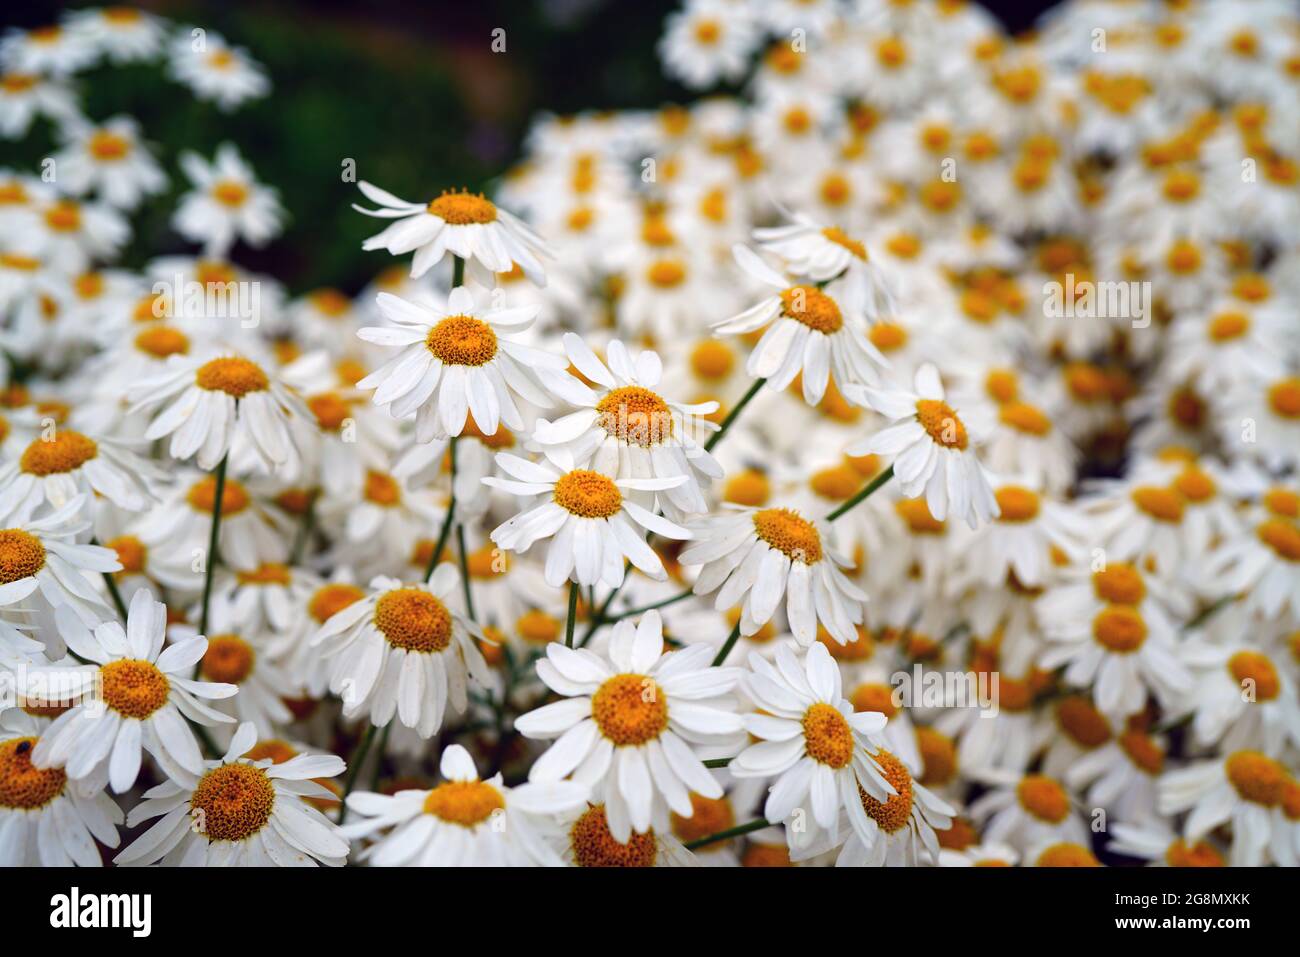 White and yellow daisy feverfew flowers of tanacetum corymbosum (Schultz) Stock Photo